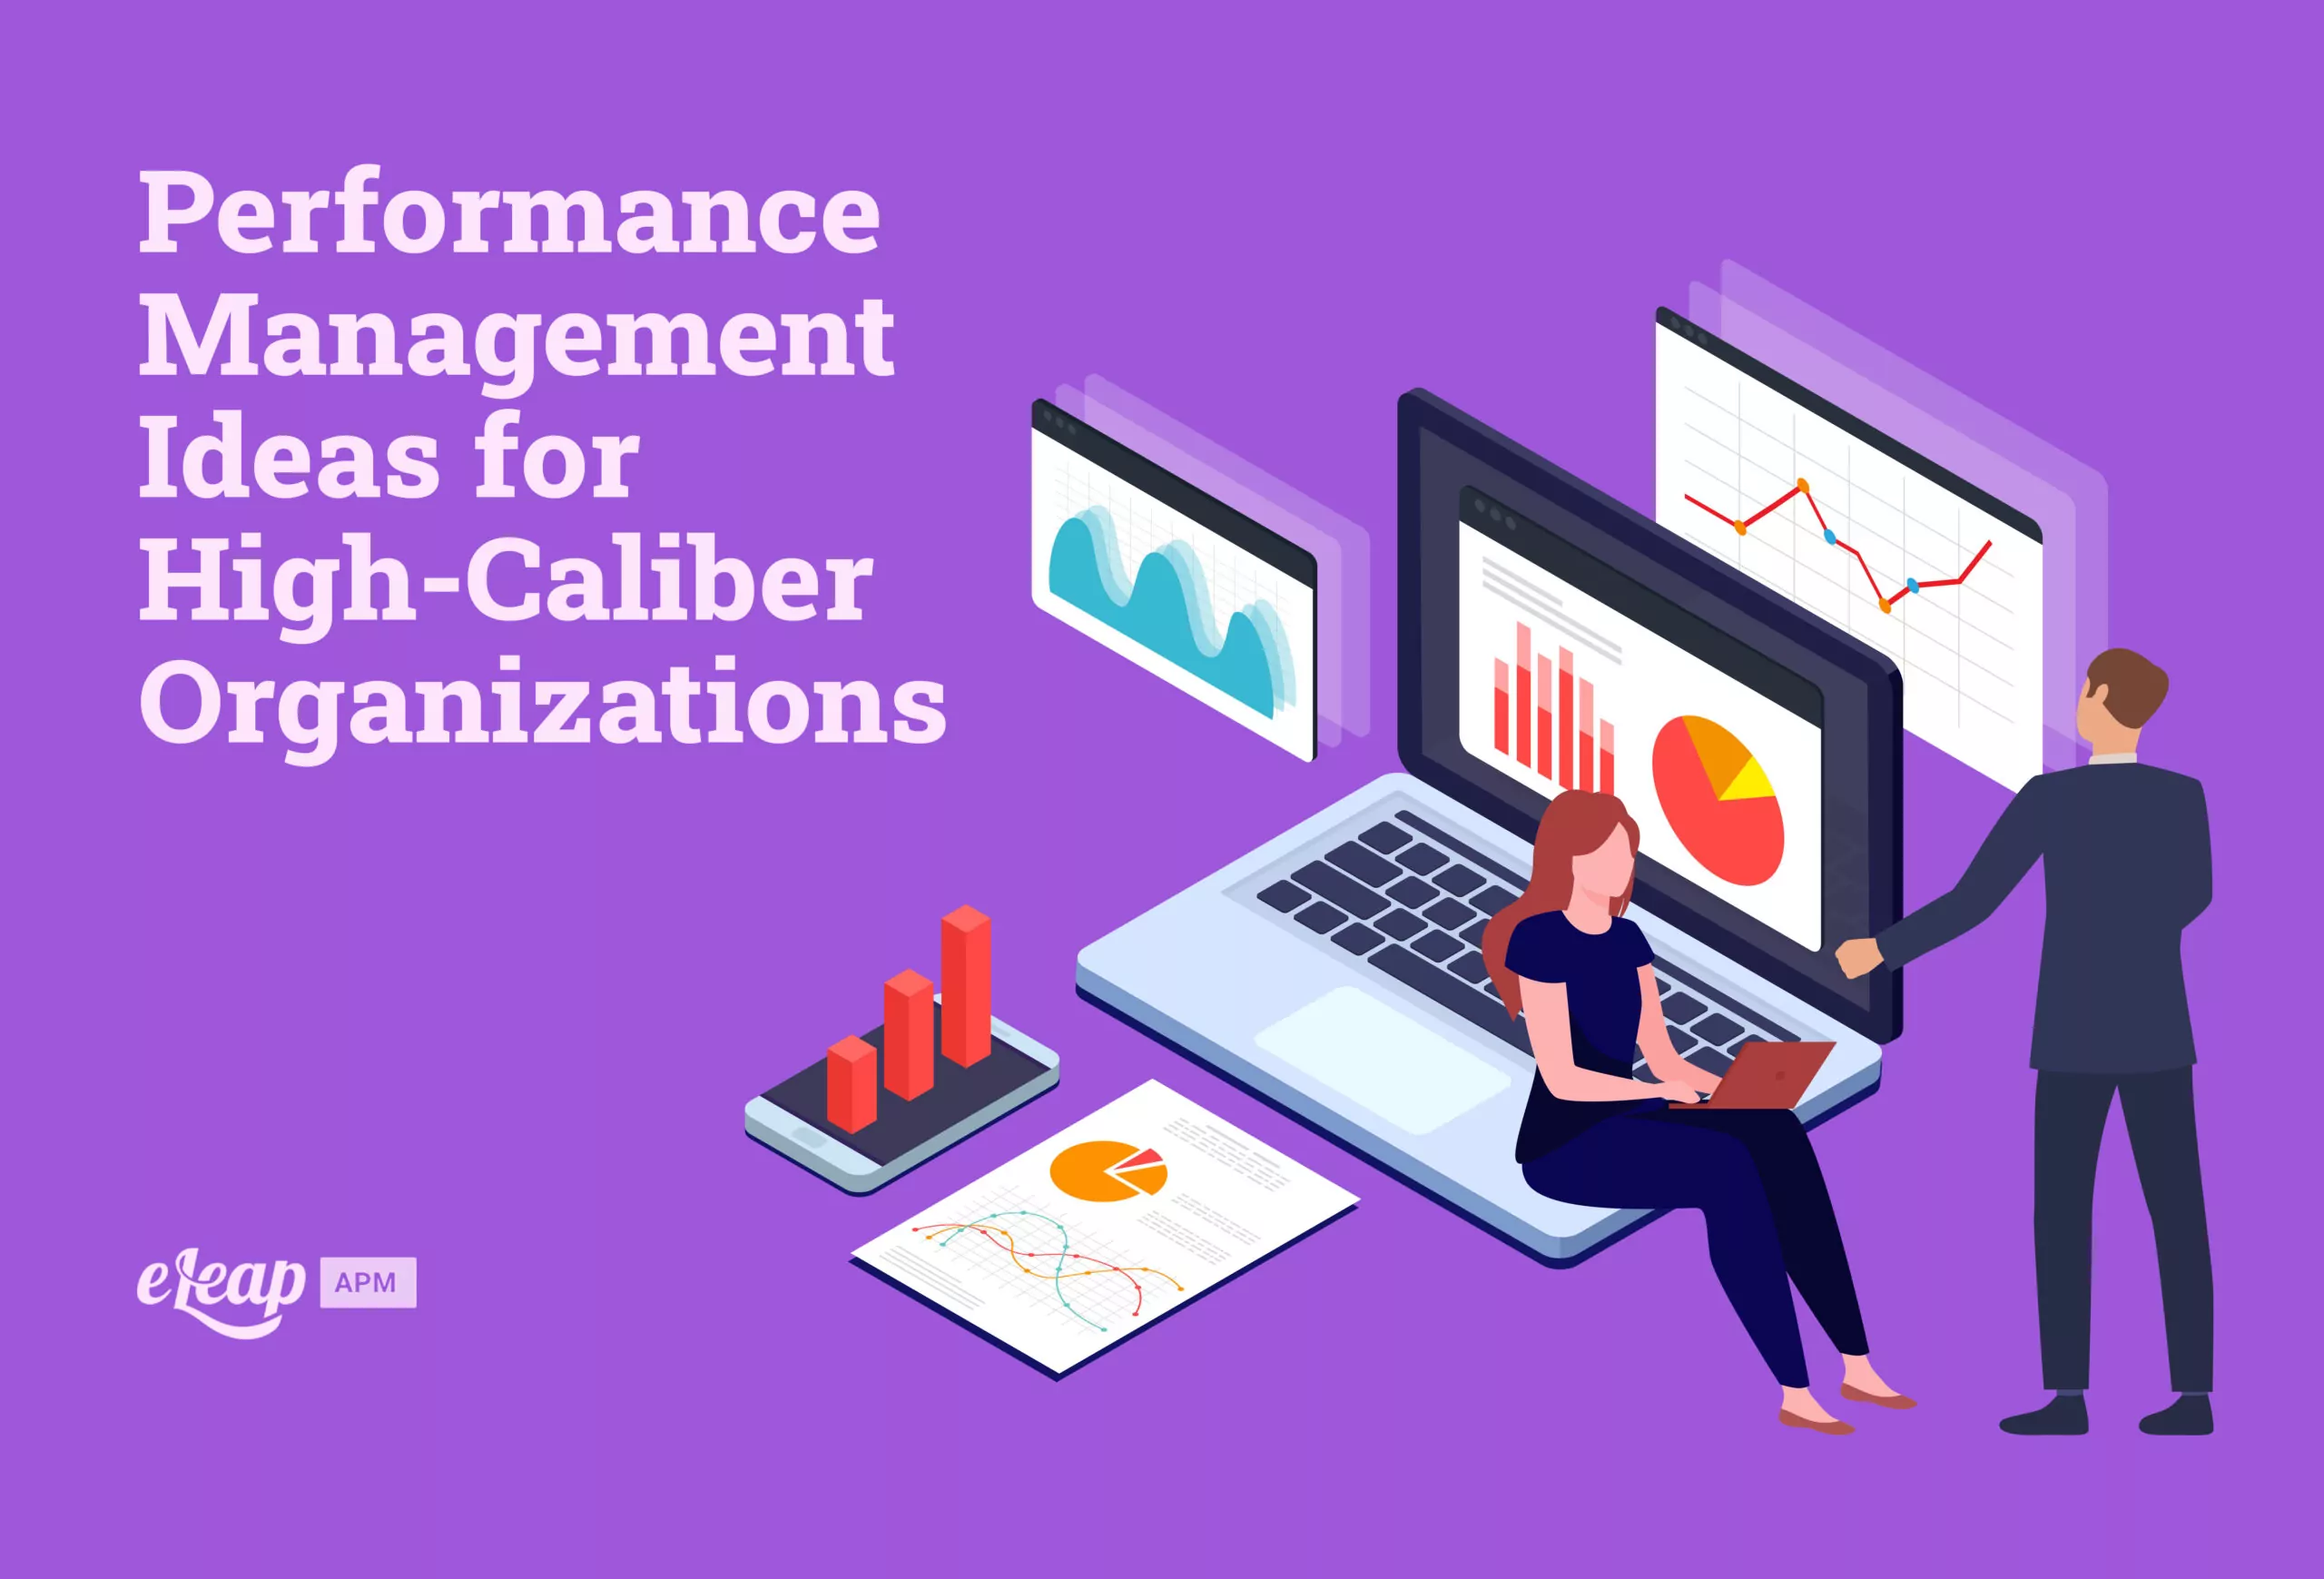 Performance Management Ideas for High-Caliber Organizations